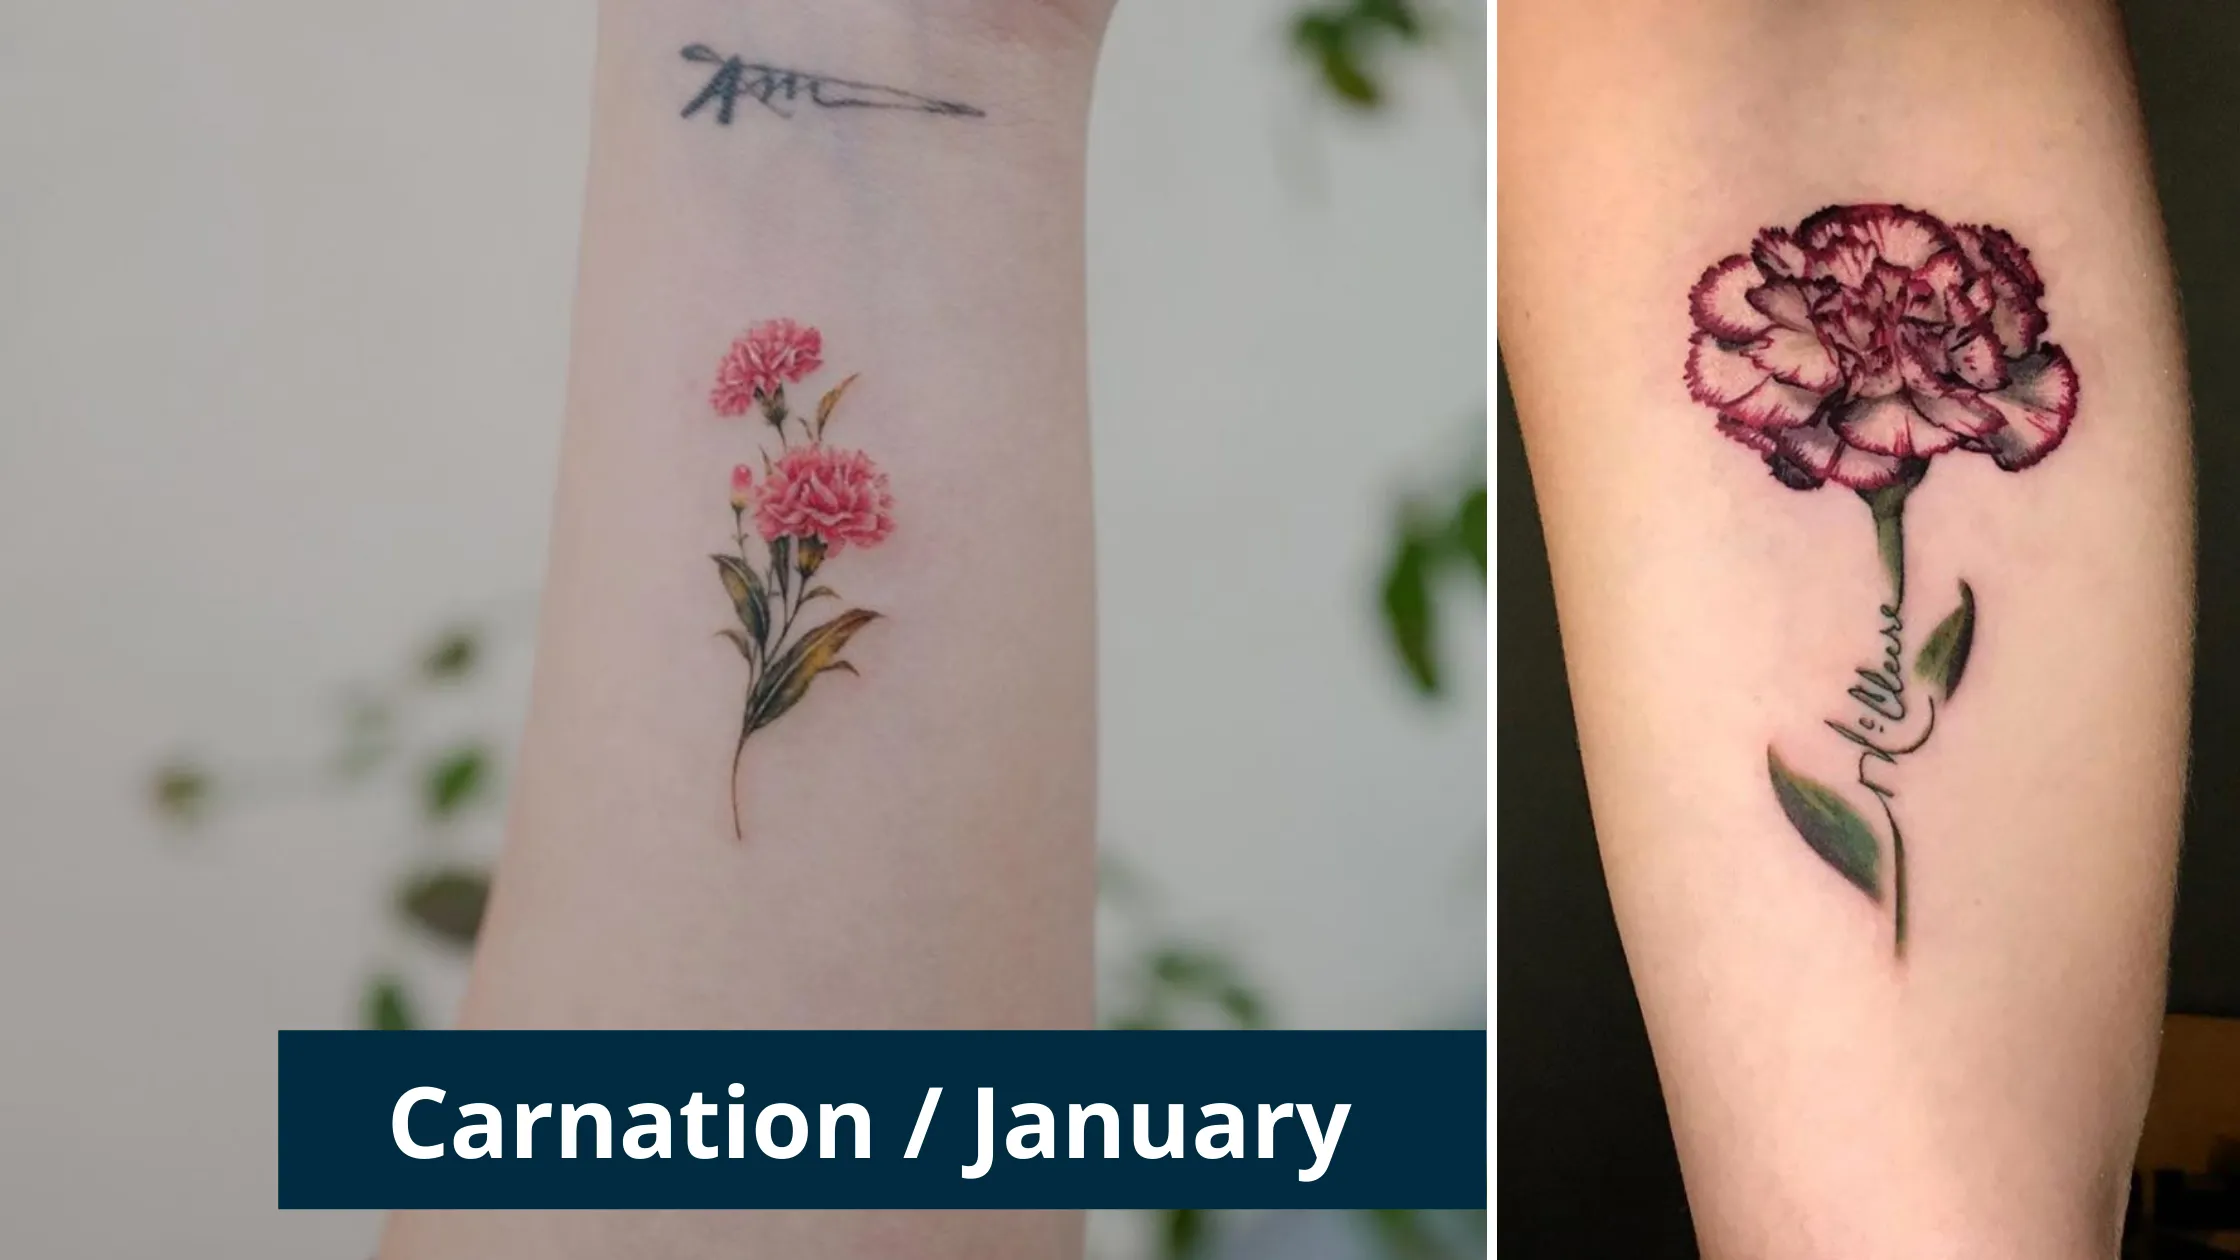 Birth flowers tattoo ideas 2021 -Carnation January